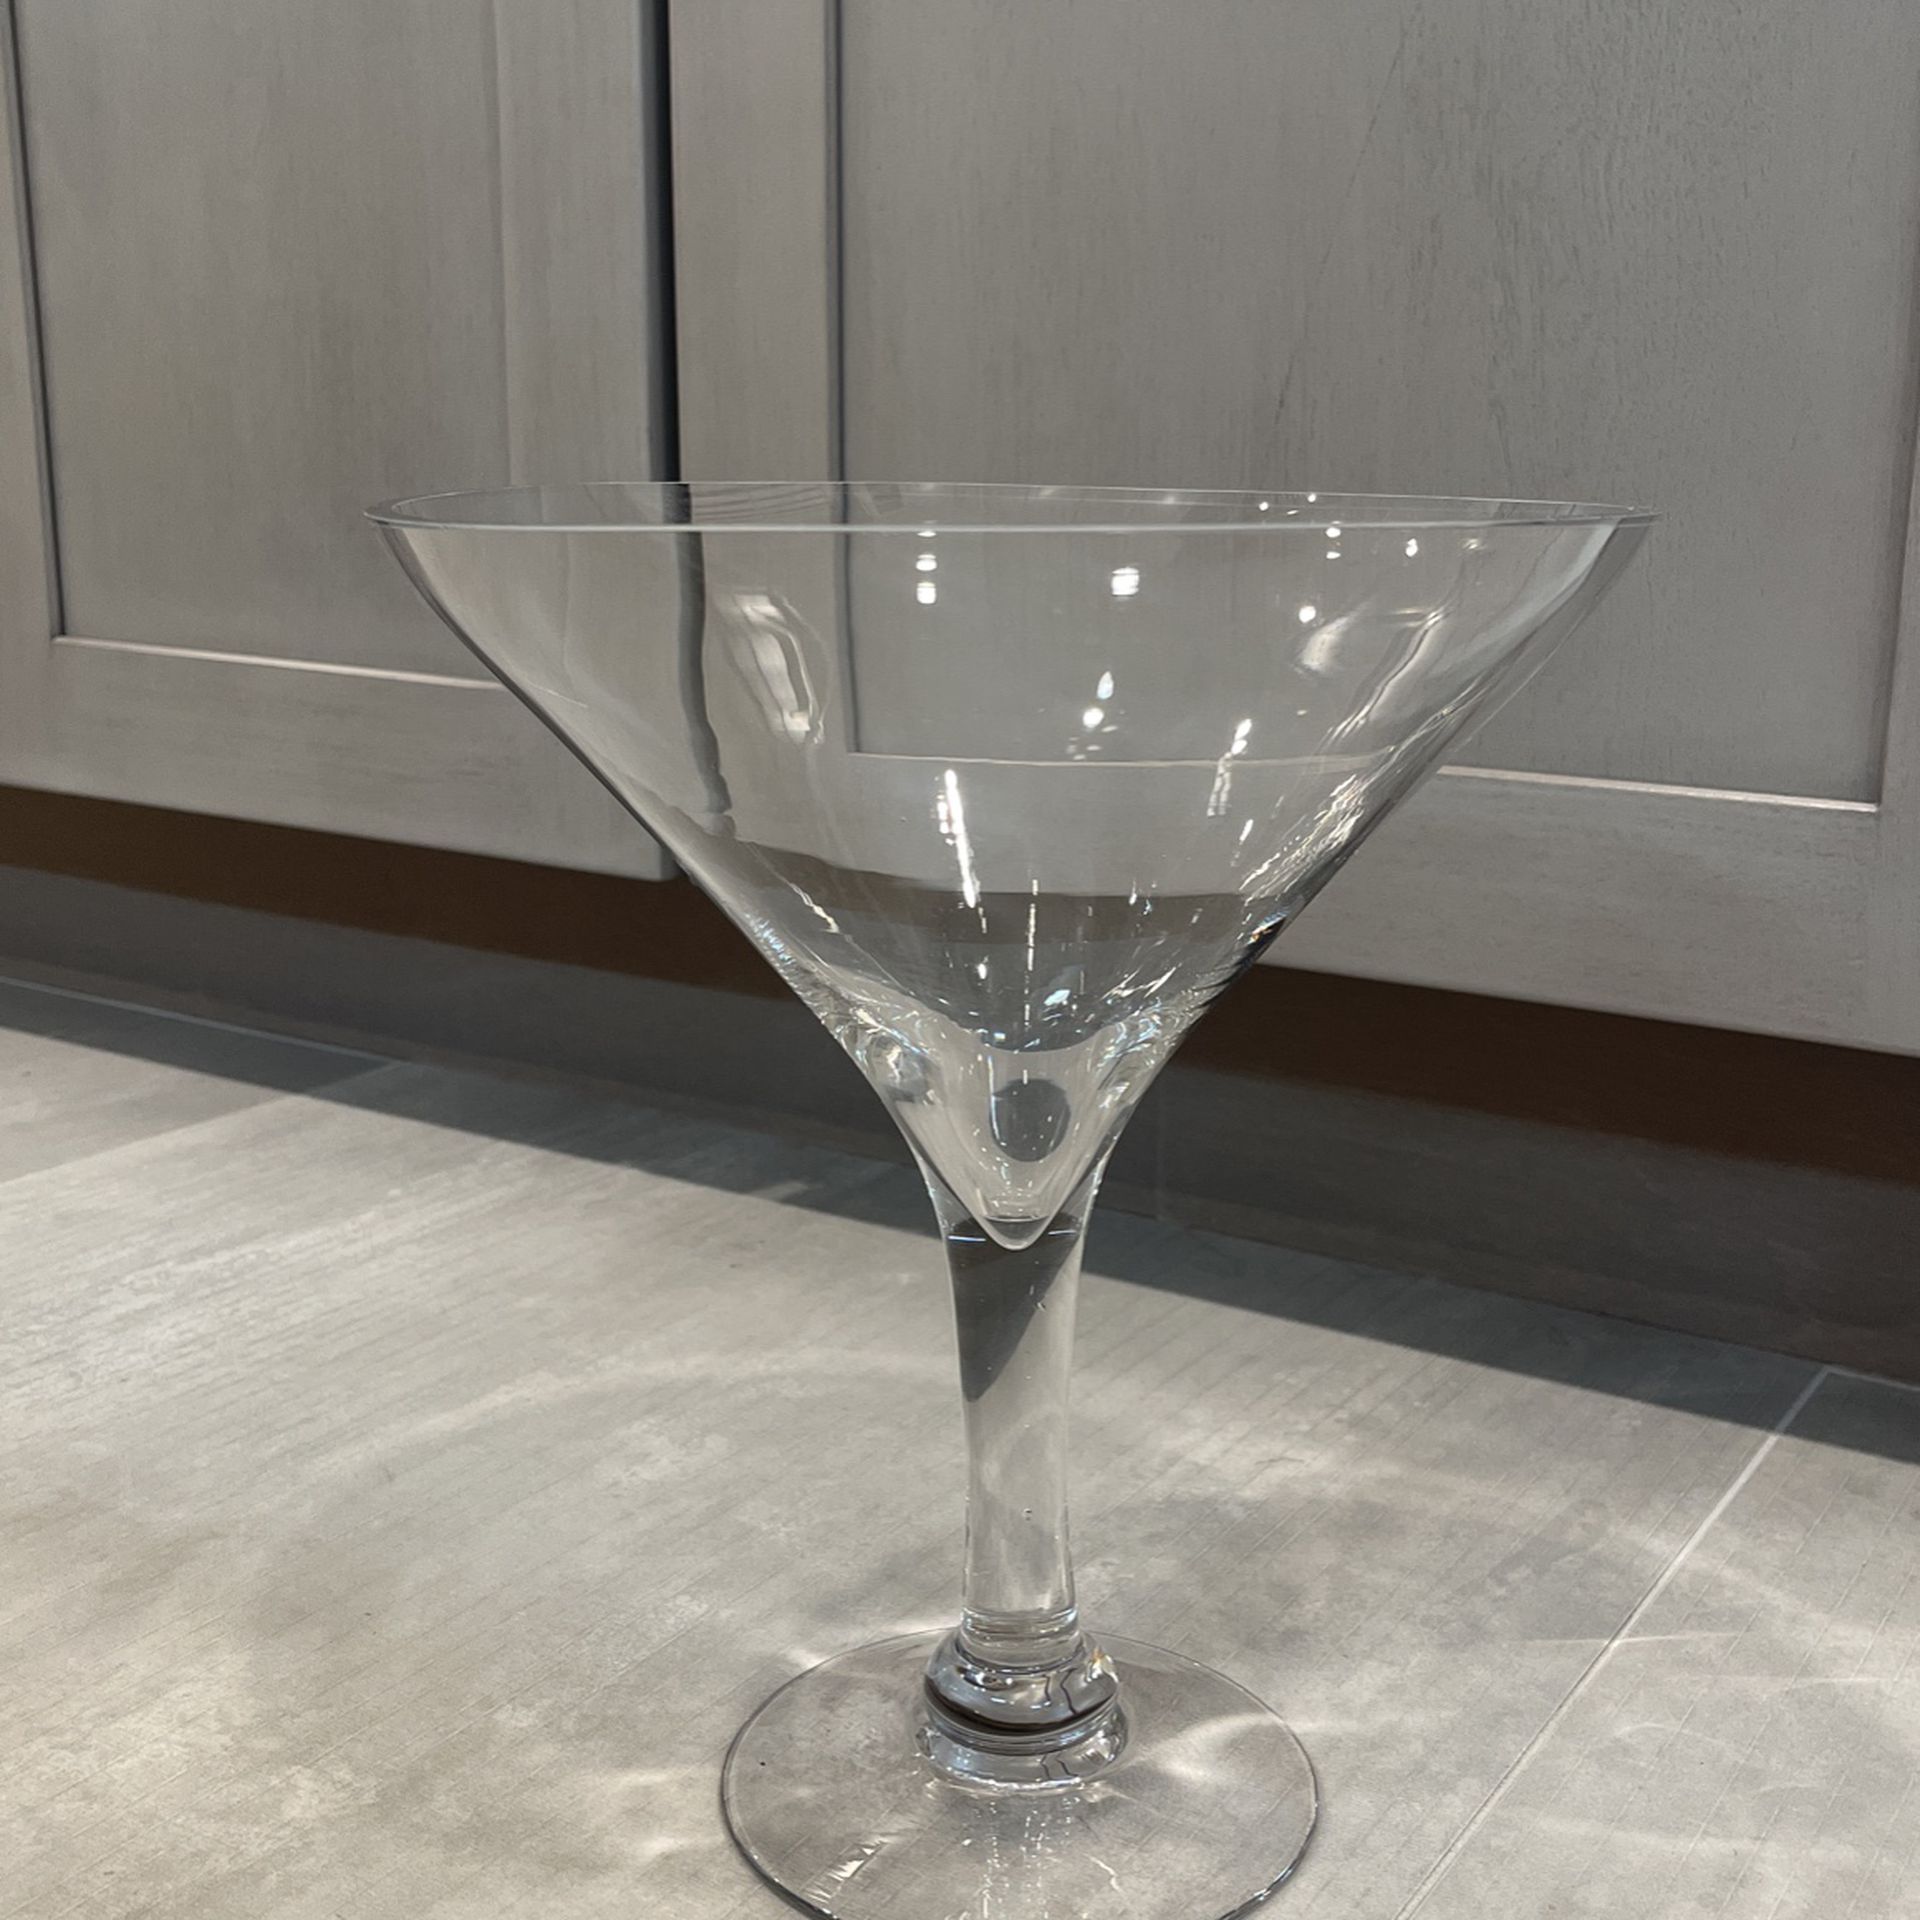 Grande - Jumbo Martini Glass Cocktail Centerpiece (Item# GMG-02)